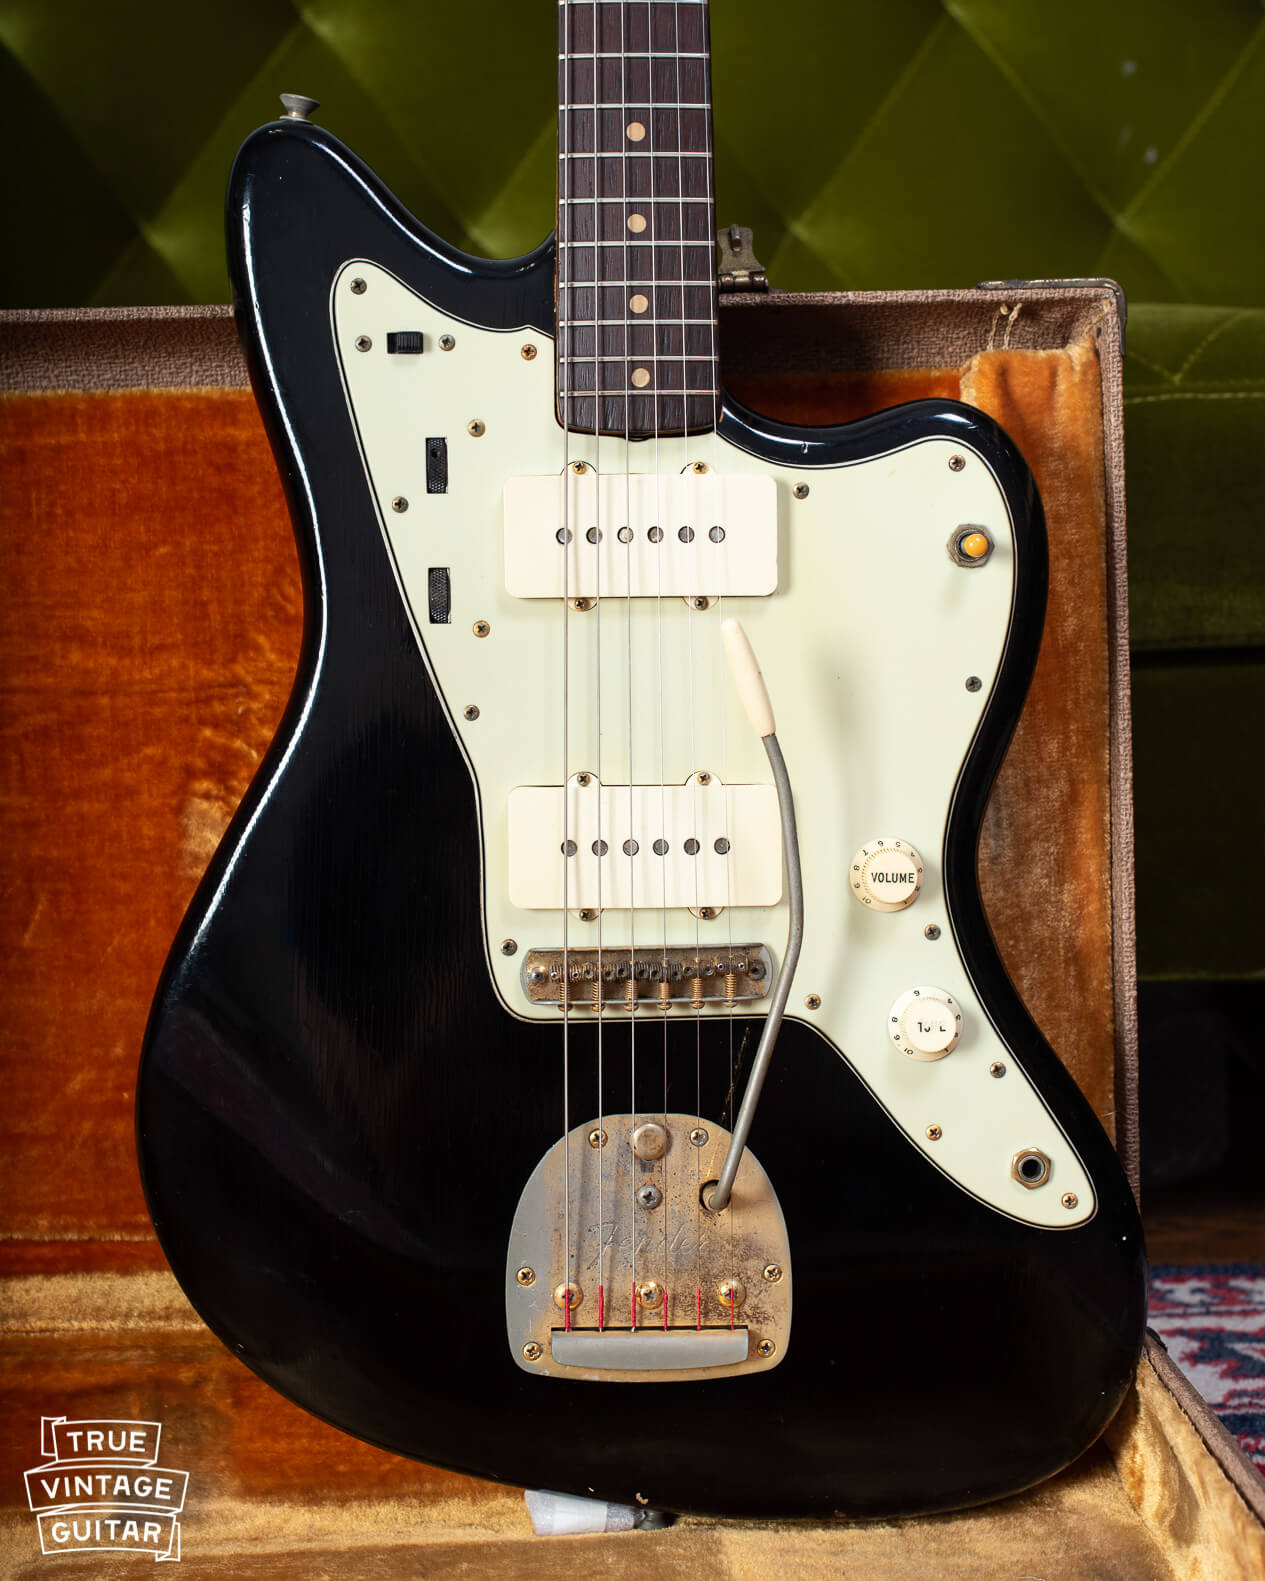 Fender Jazzmaster 1960 Black with gold hardware